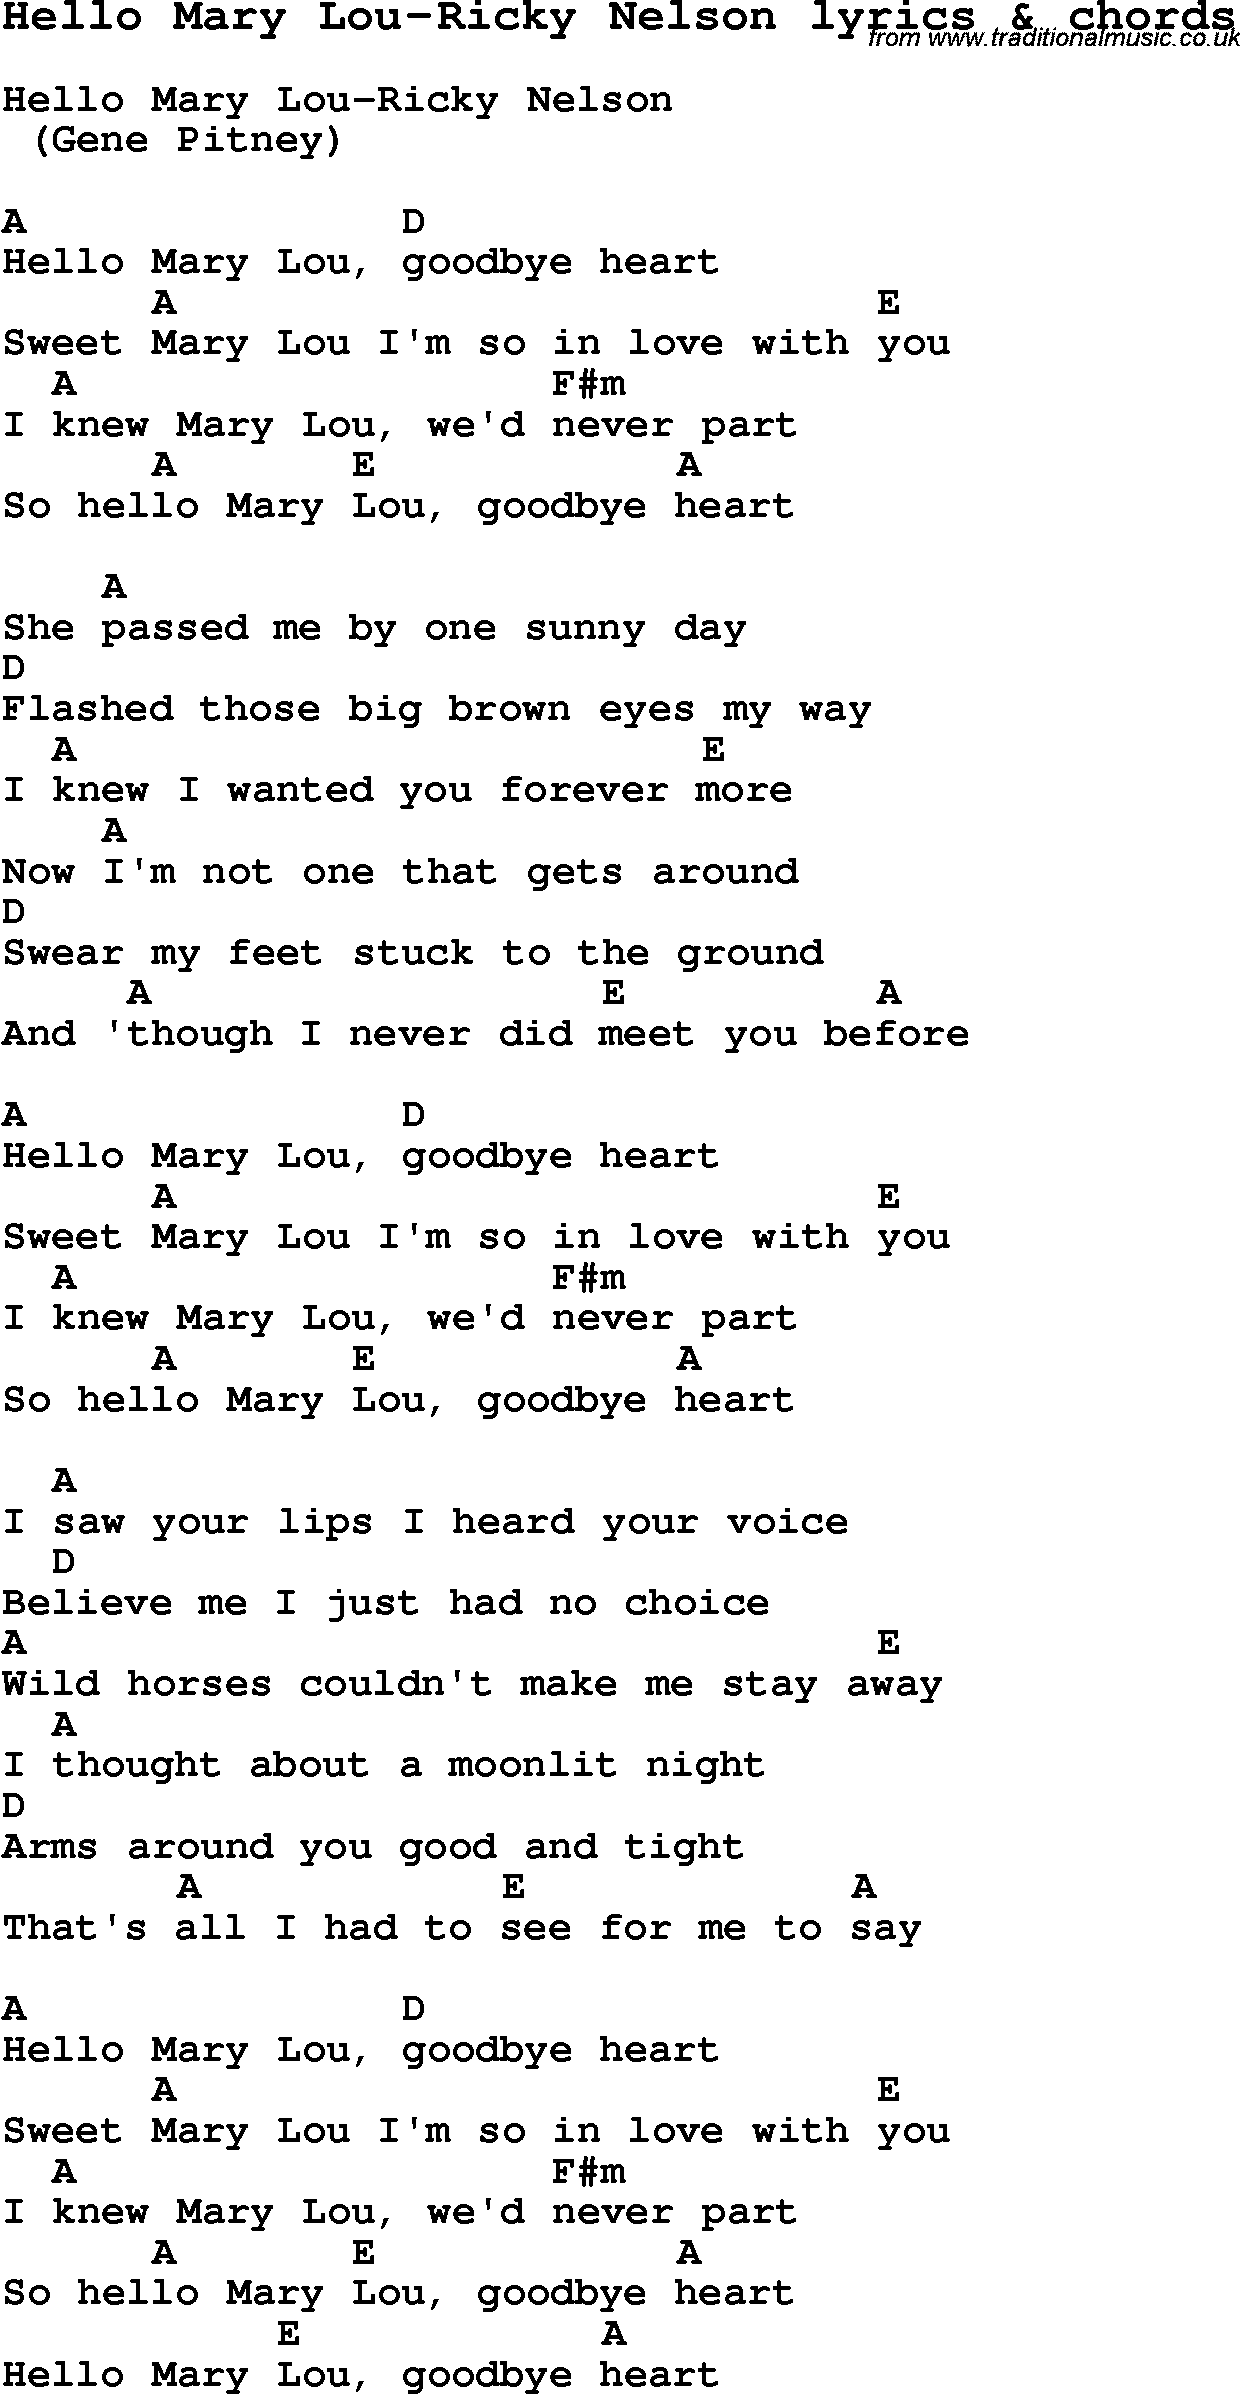 Love Song Lyrics for: Hello Mary Lou-Ricky Nelson with chords for Ukulele, Guitar Banjo etc.